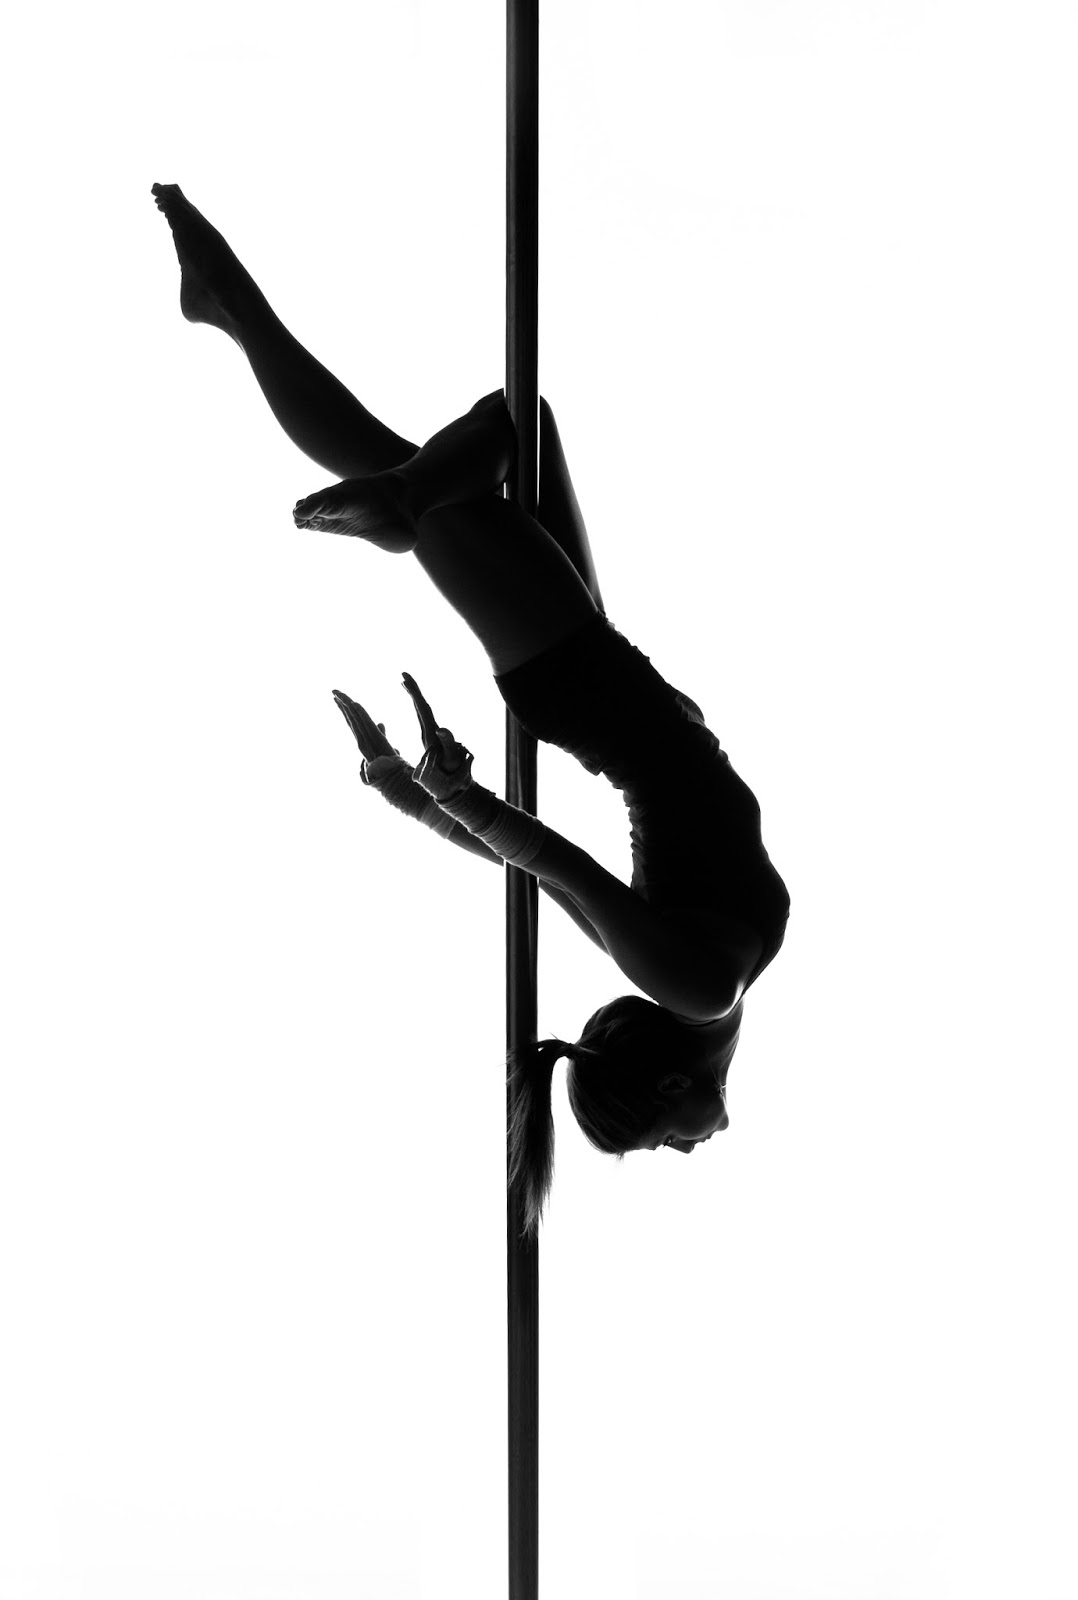 Pole Dancer Silhouette Cliparts.co